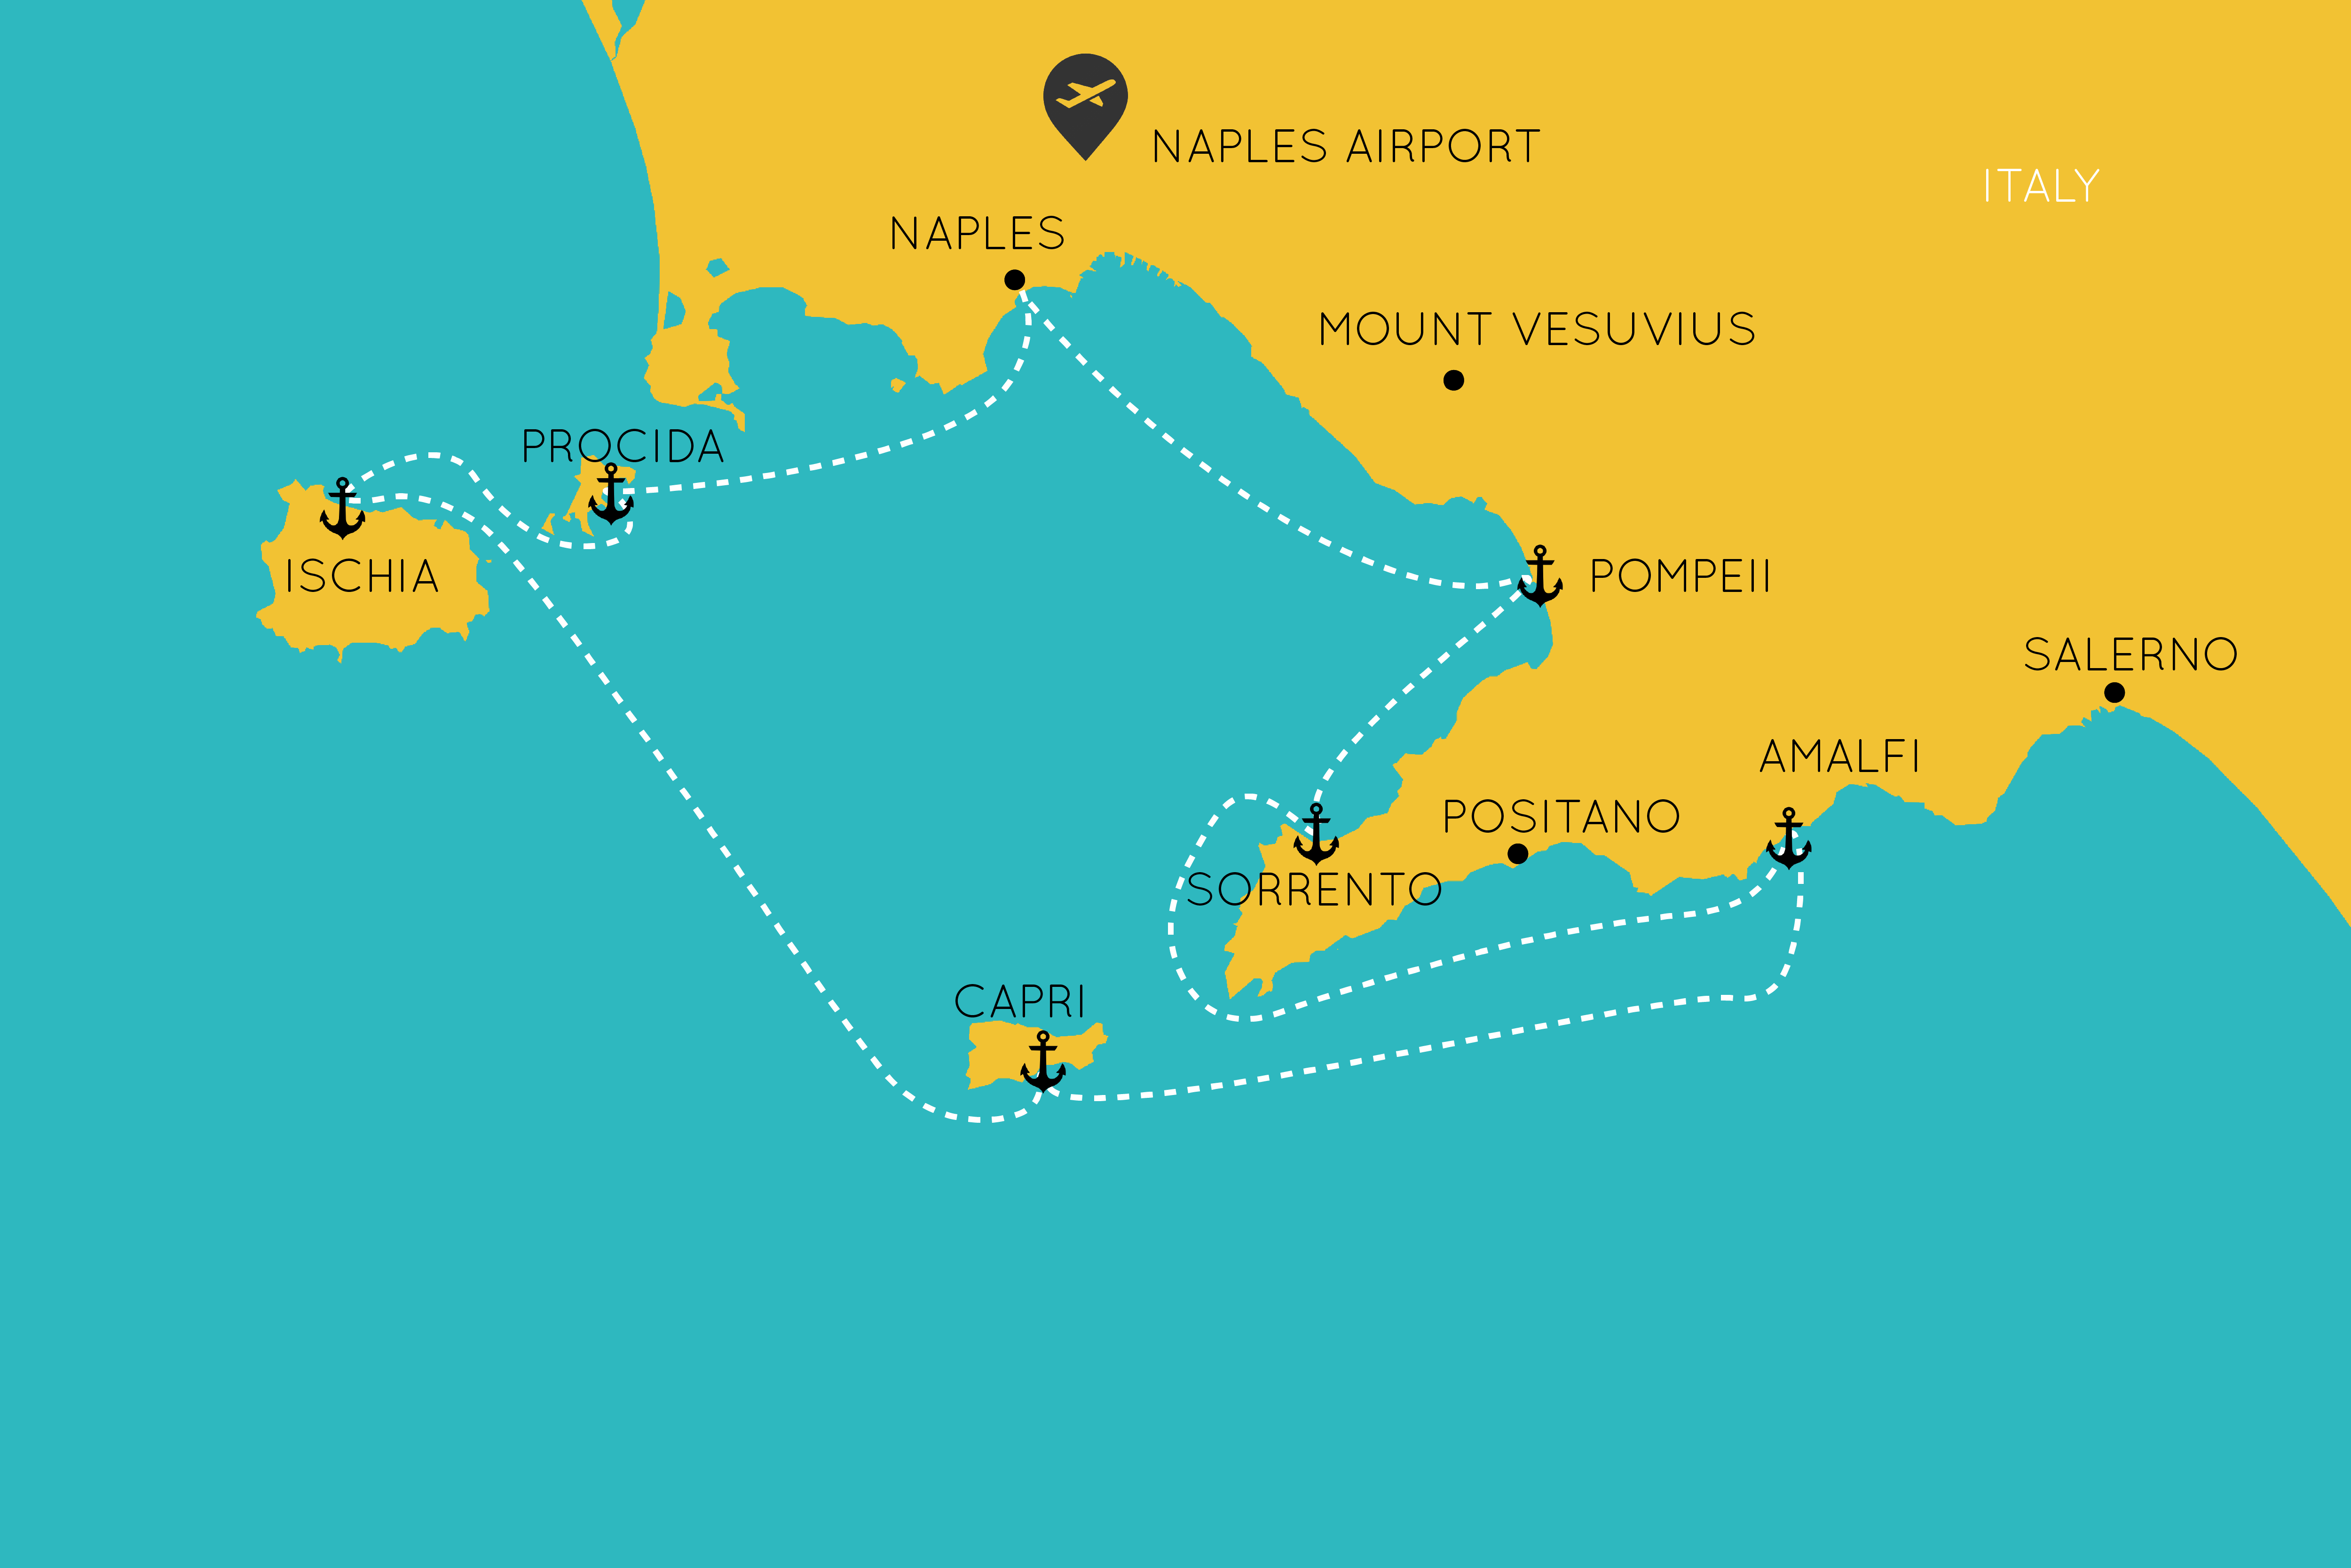 amalfi coast travel itinerary